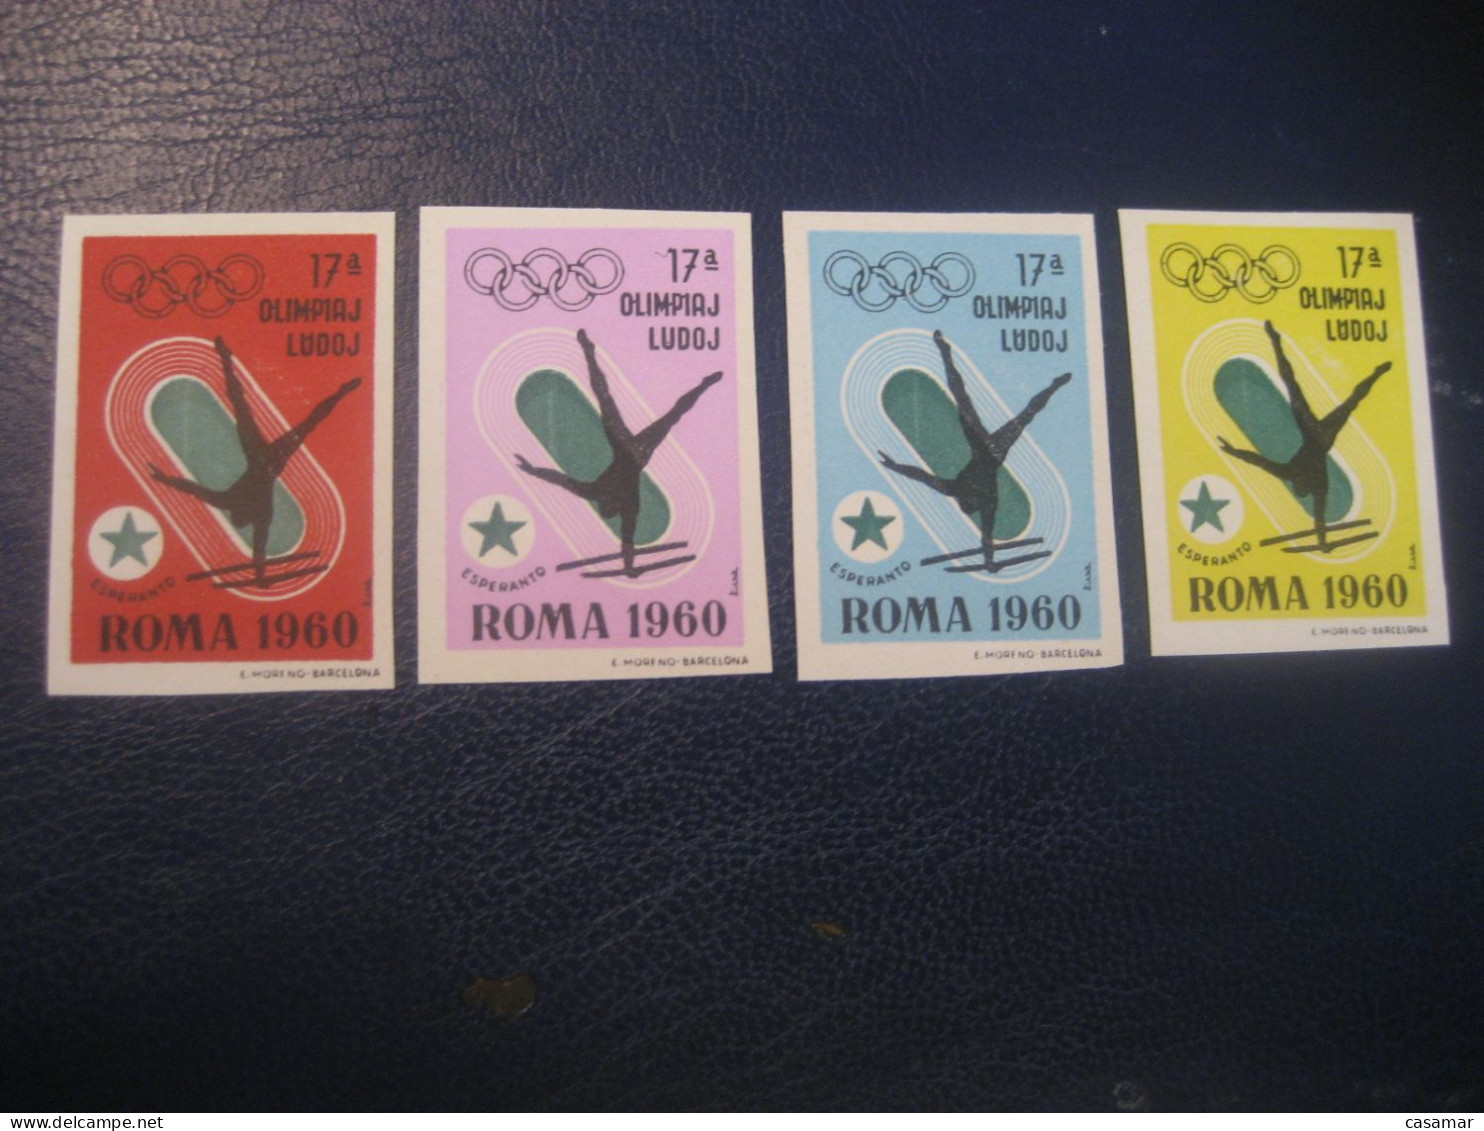 ROMA 1960 Gymnastics Gymnastique Olympic Games Olympics Esperanto 4 Imperforated Poster Stamp Vignette ITALY Spain Label - Gymnastik